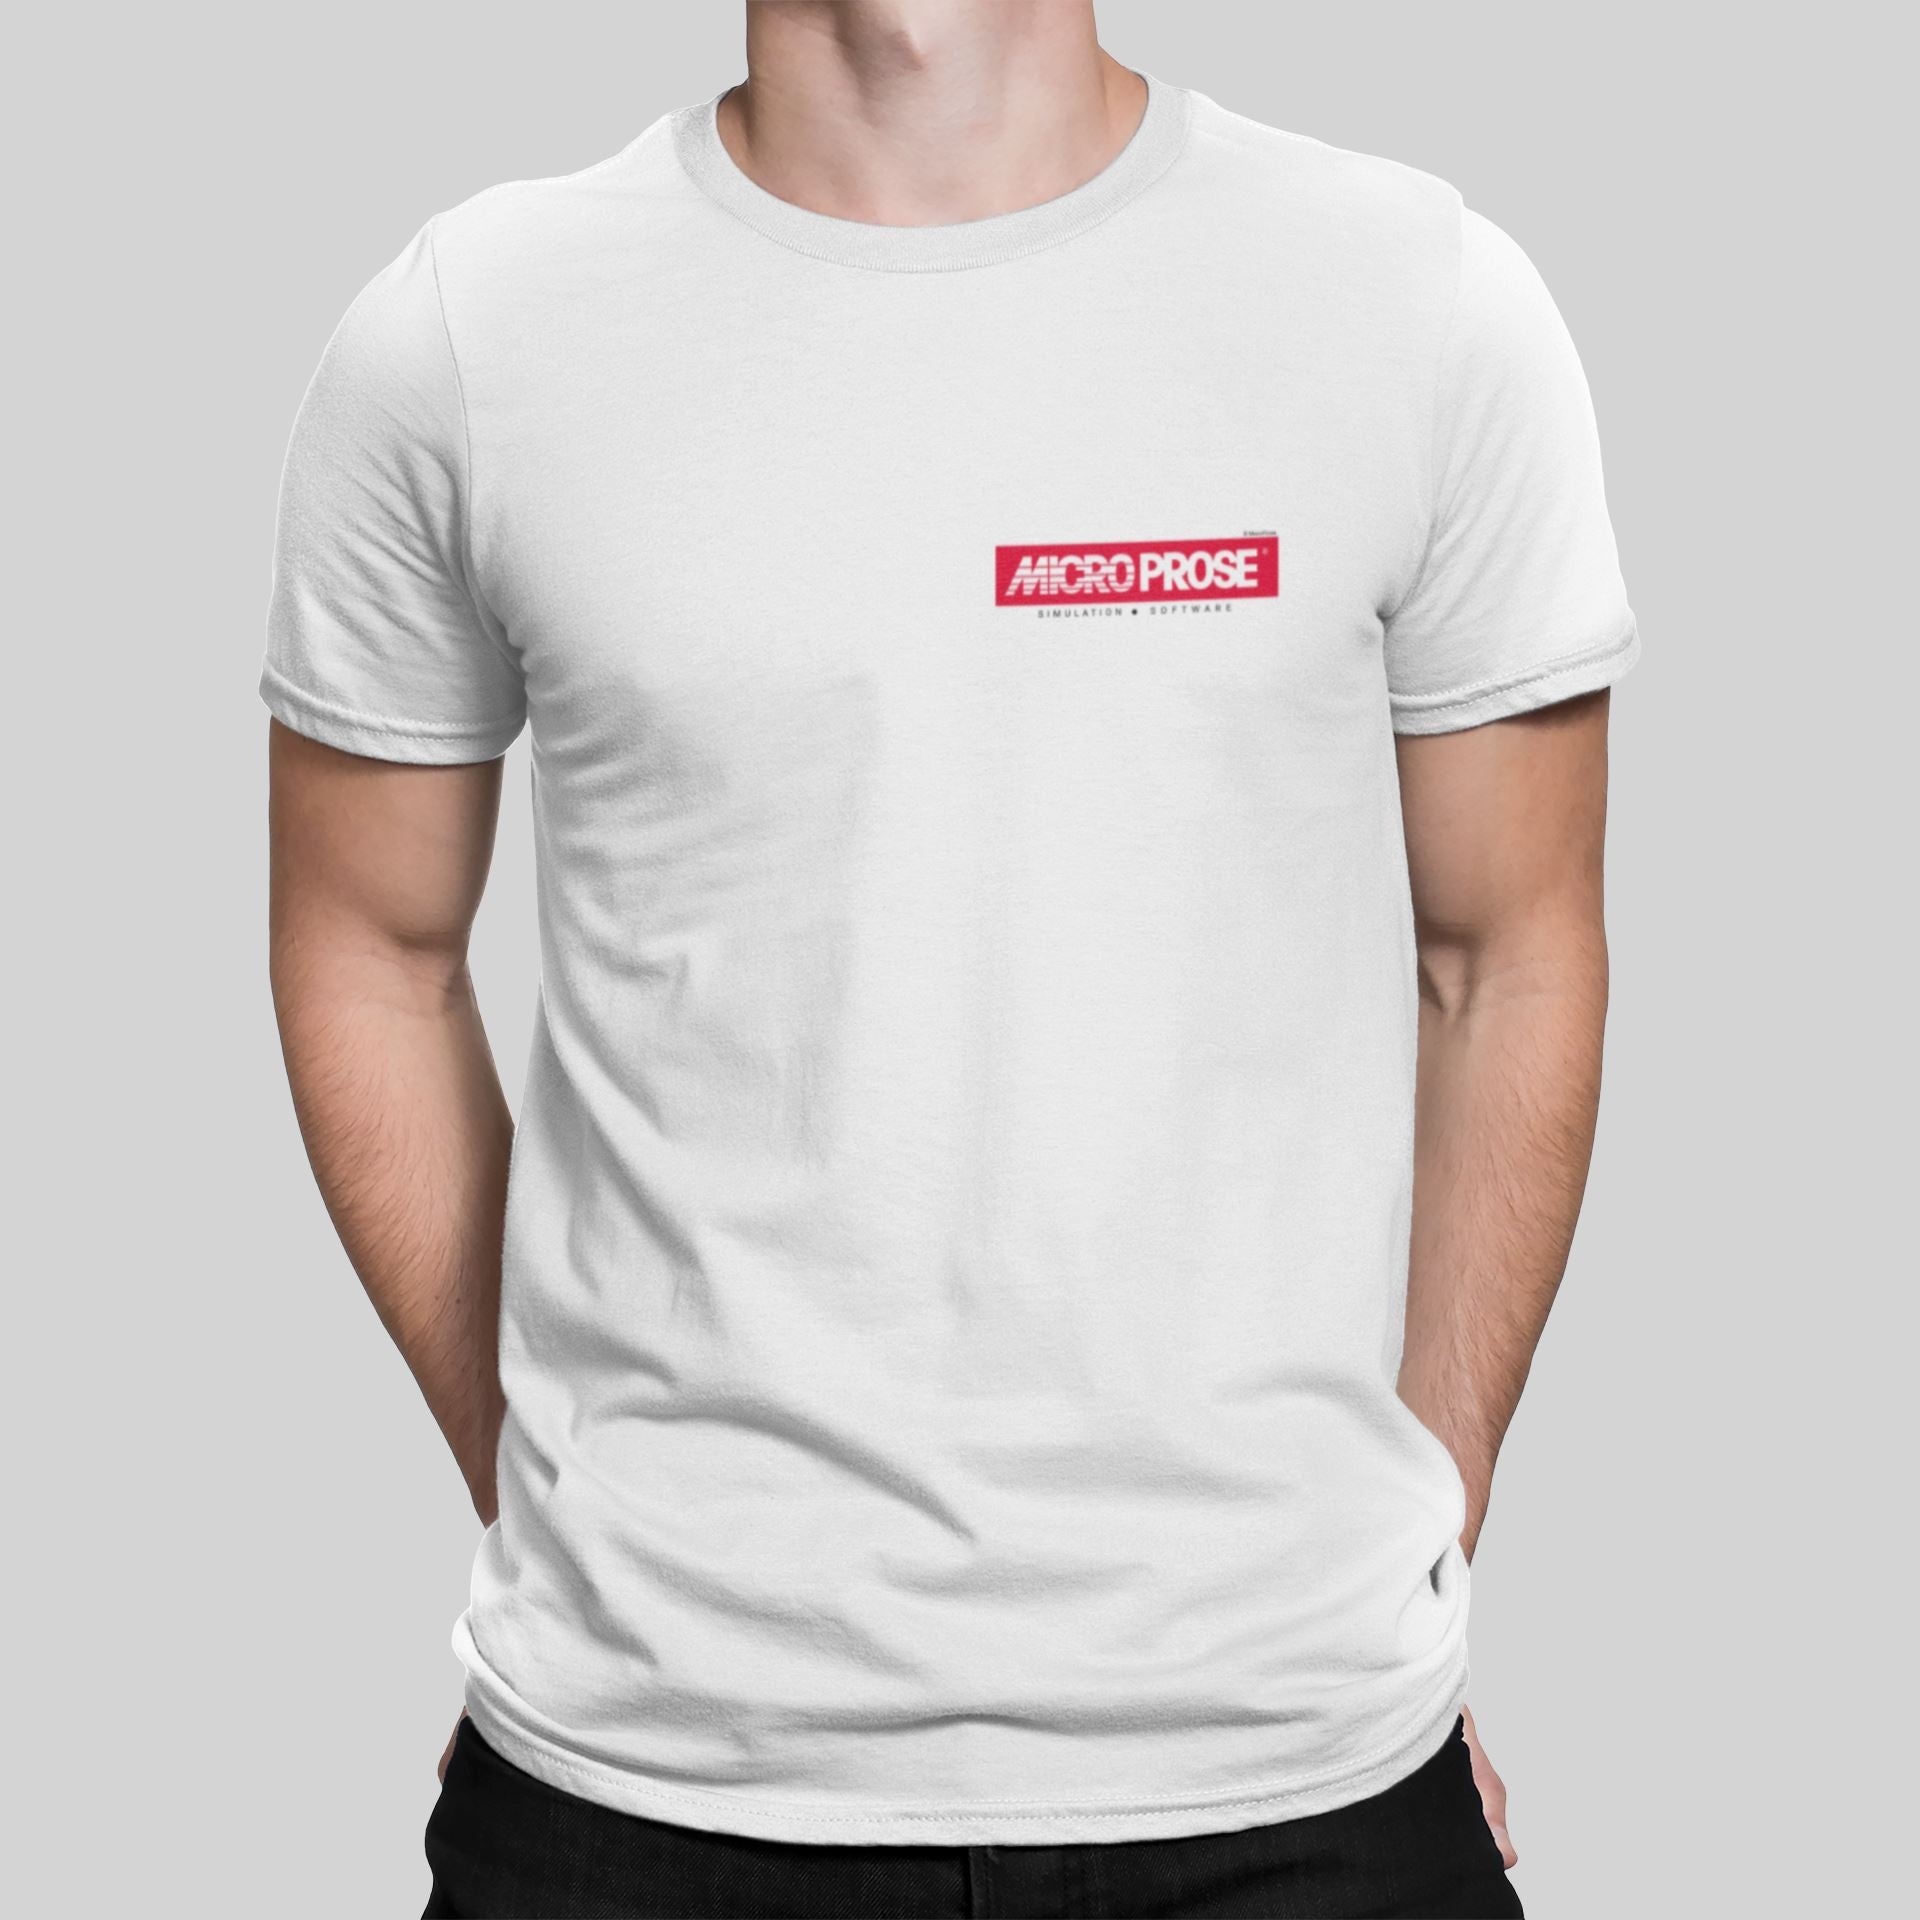 Microprose Pocket Logo Retro Gaming T-Shirt T-Shirt Seven Squared Small 34-36" White 